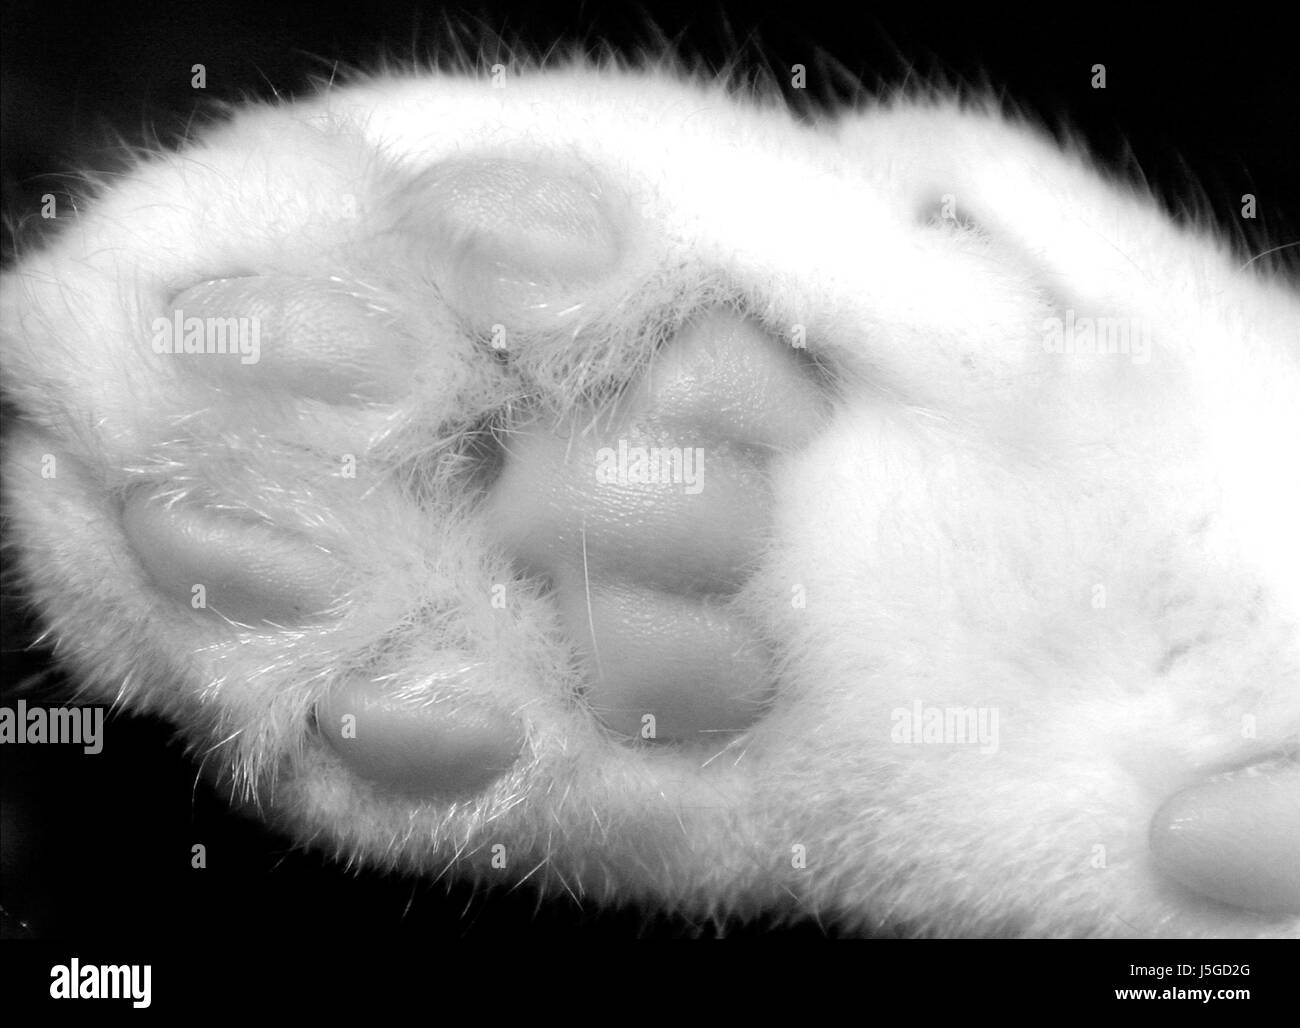 animals black swarthy jetblack deep black blank european caucasian hairs toes Stock Photo